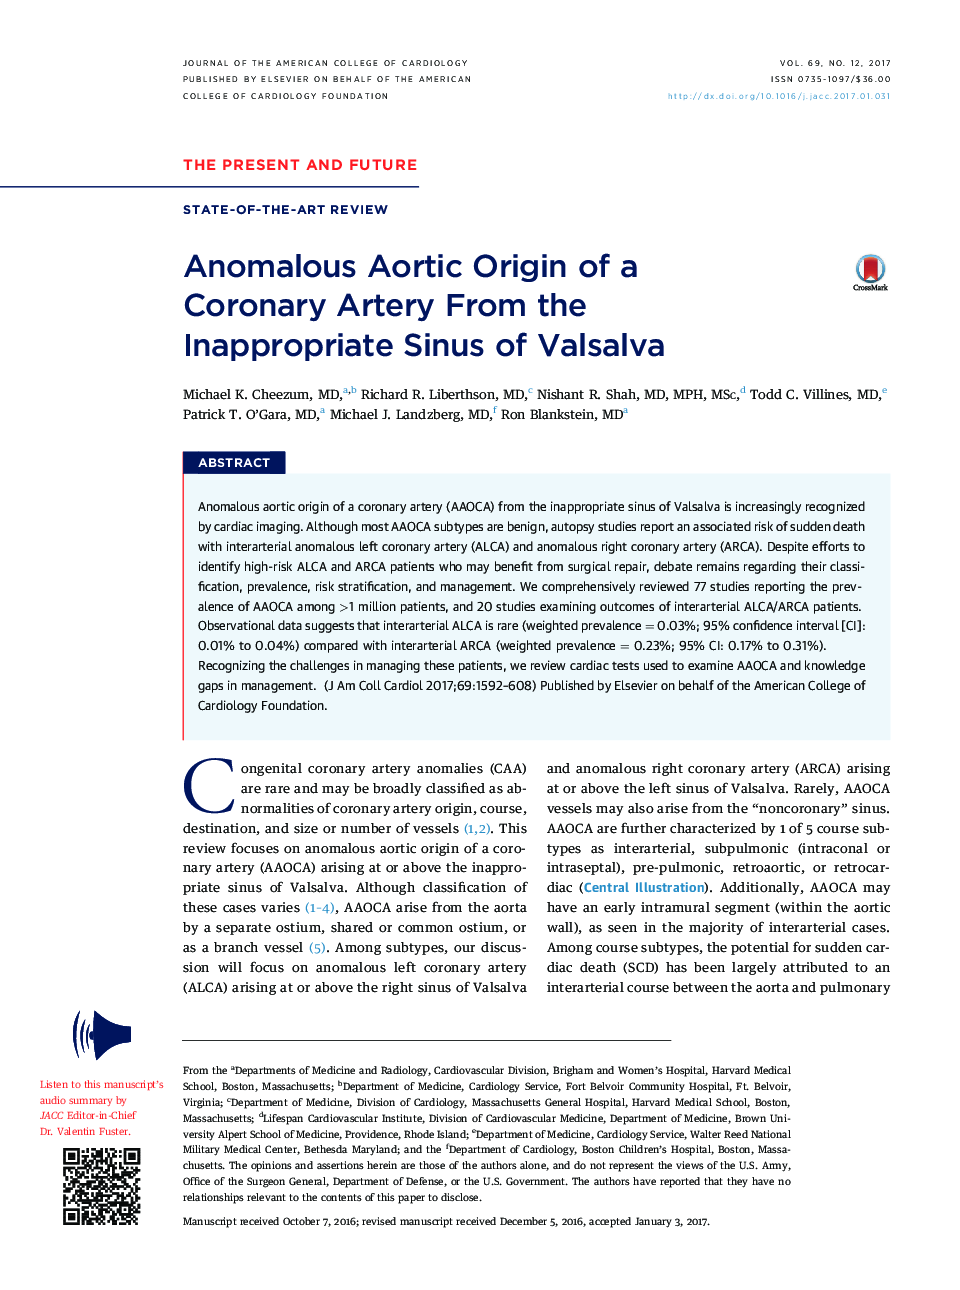 Anomalous Aortic Origin of a CoronaryÂ Artery From the InappropriateÂ Sinus ofÂ Valsalva